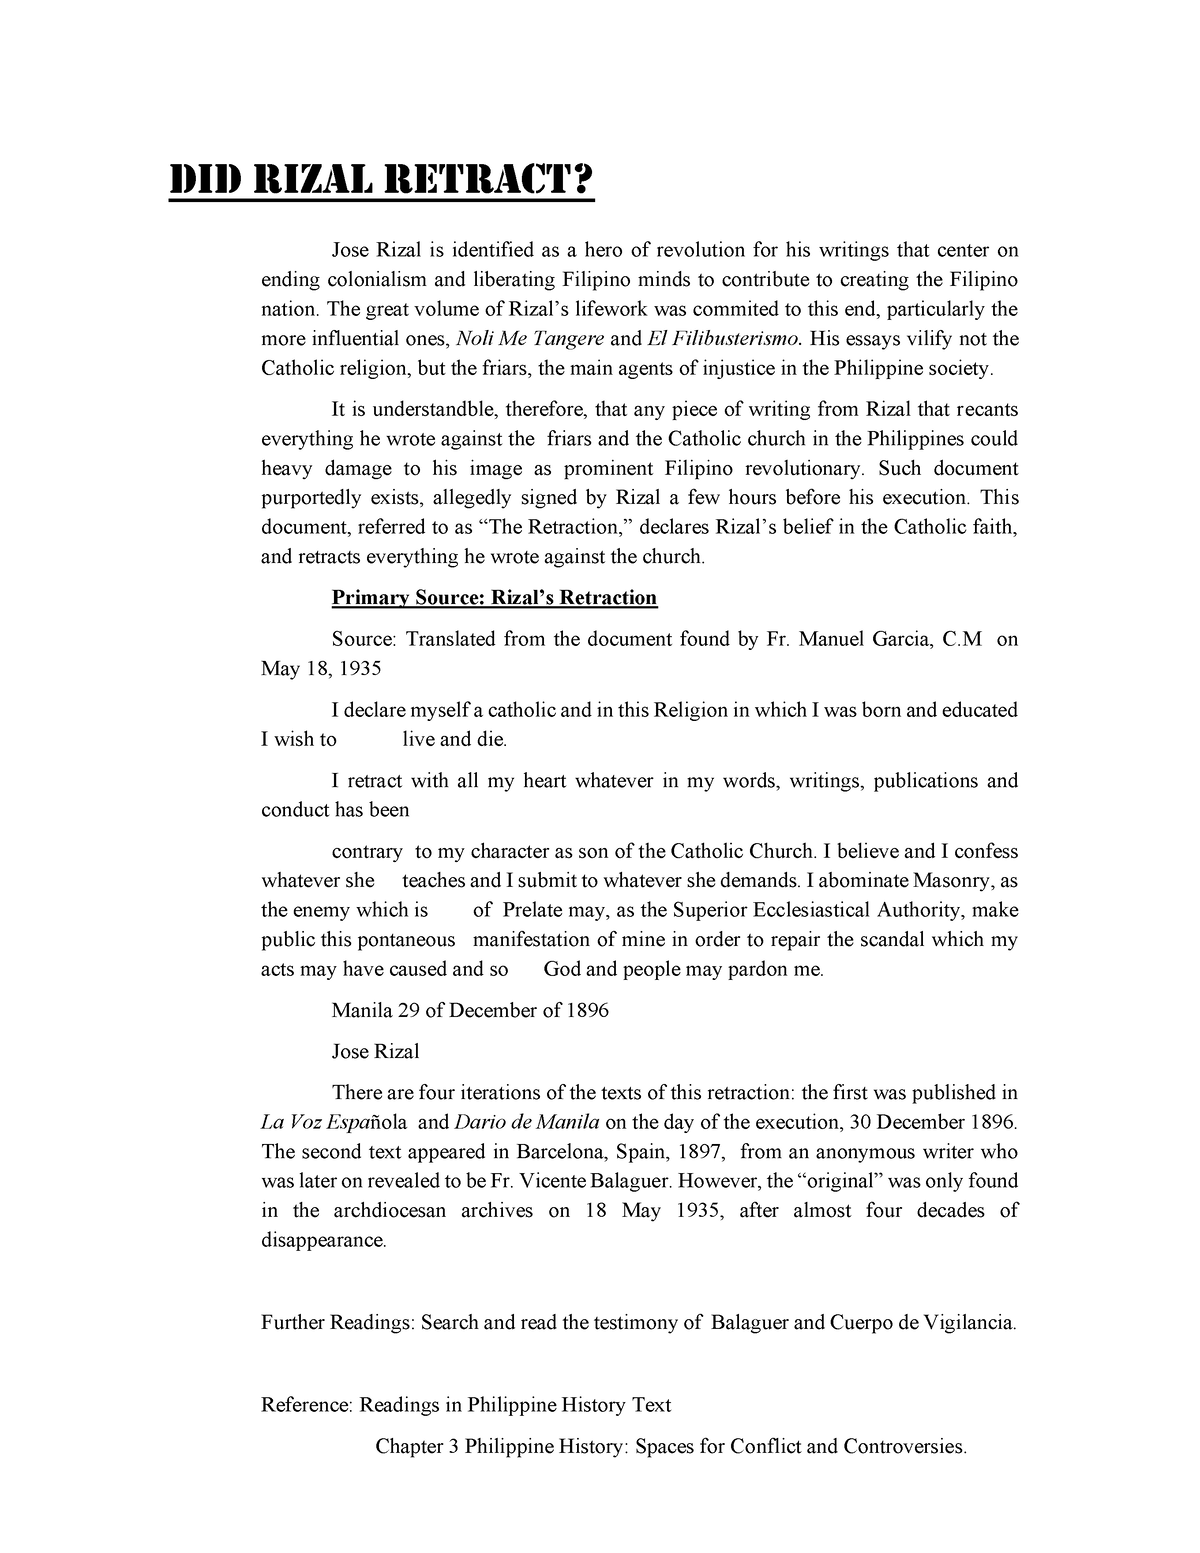 case study 3 did rizal retract summary